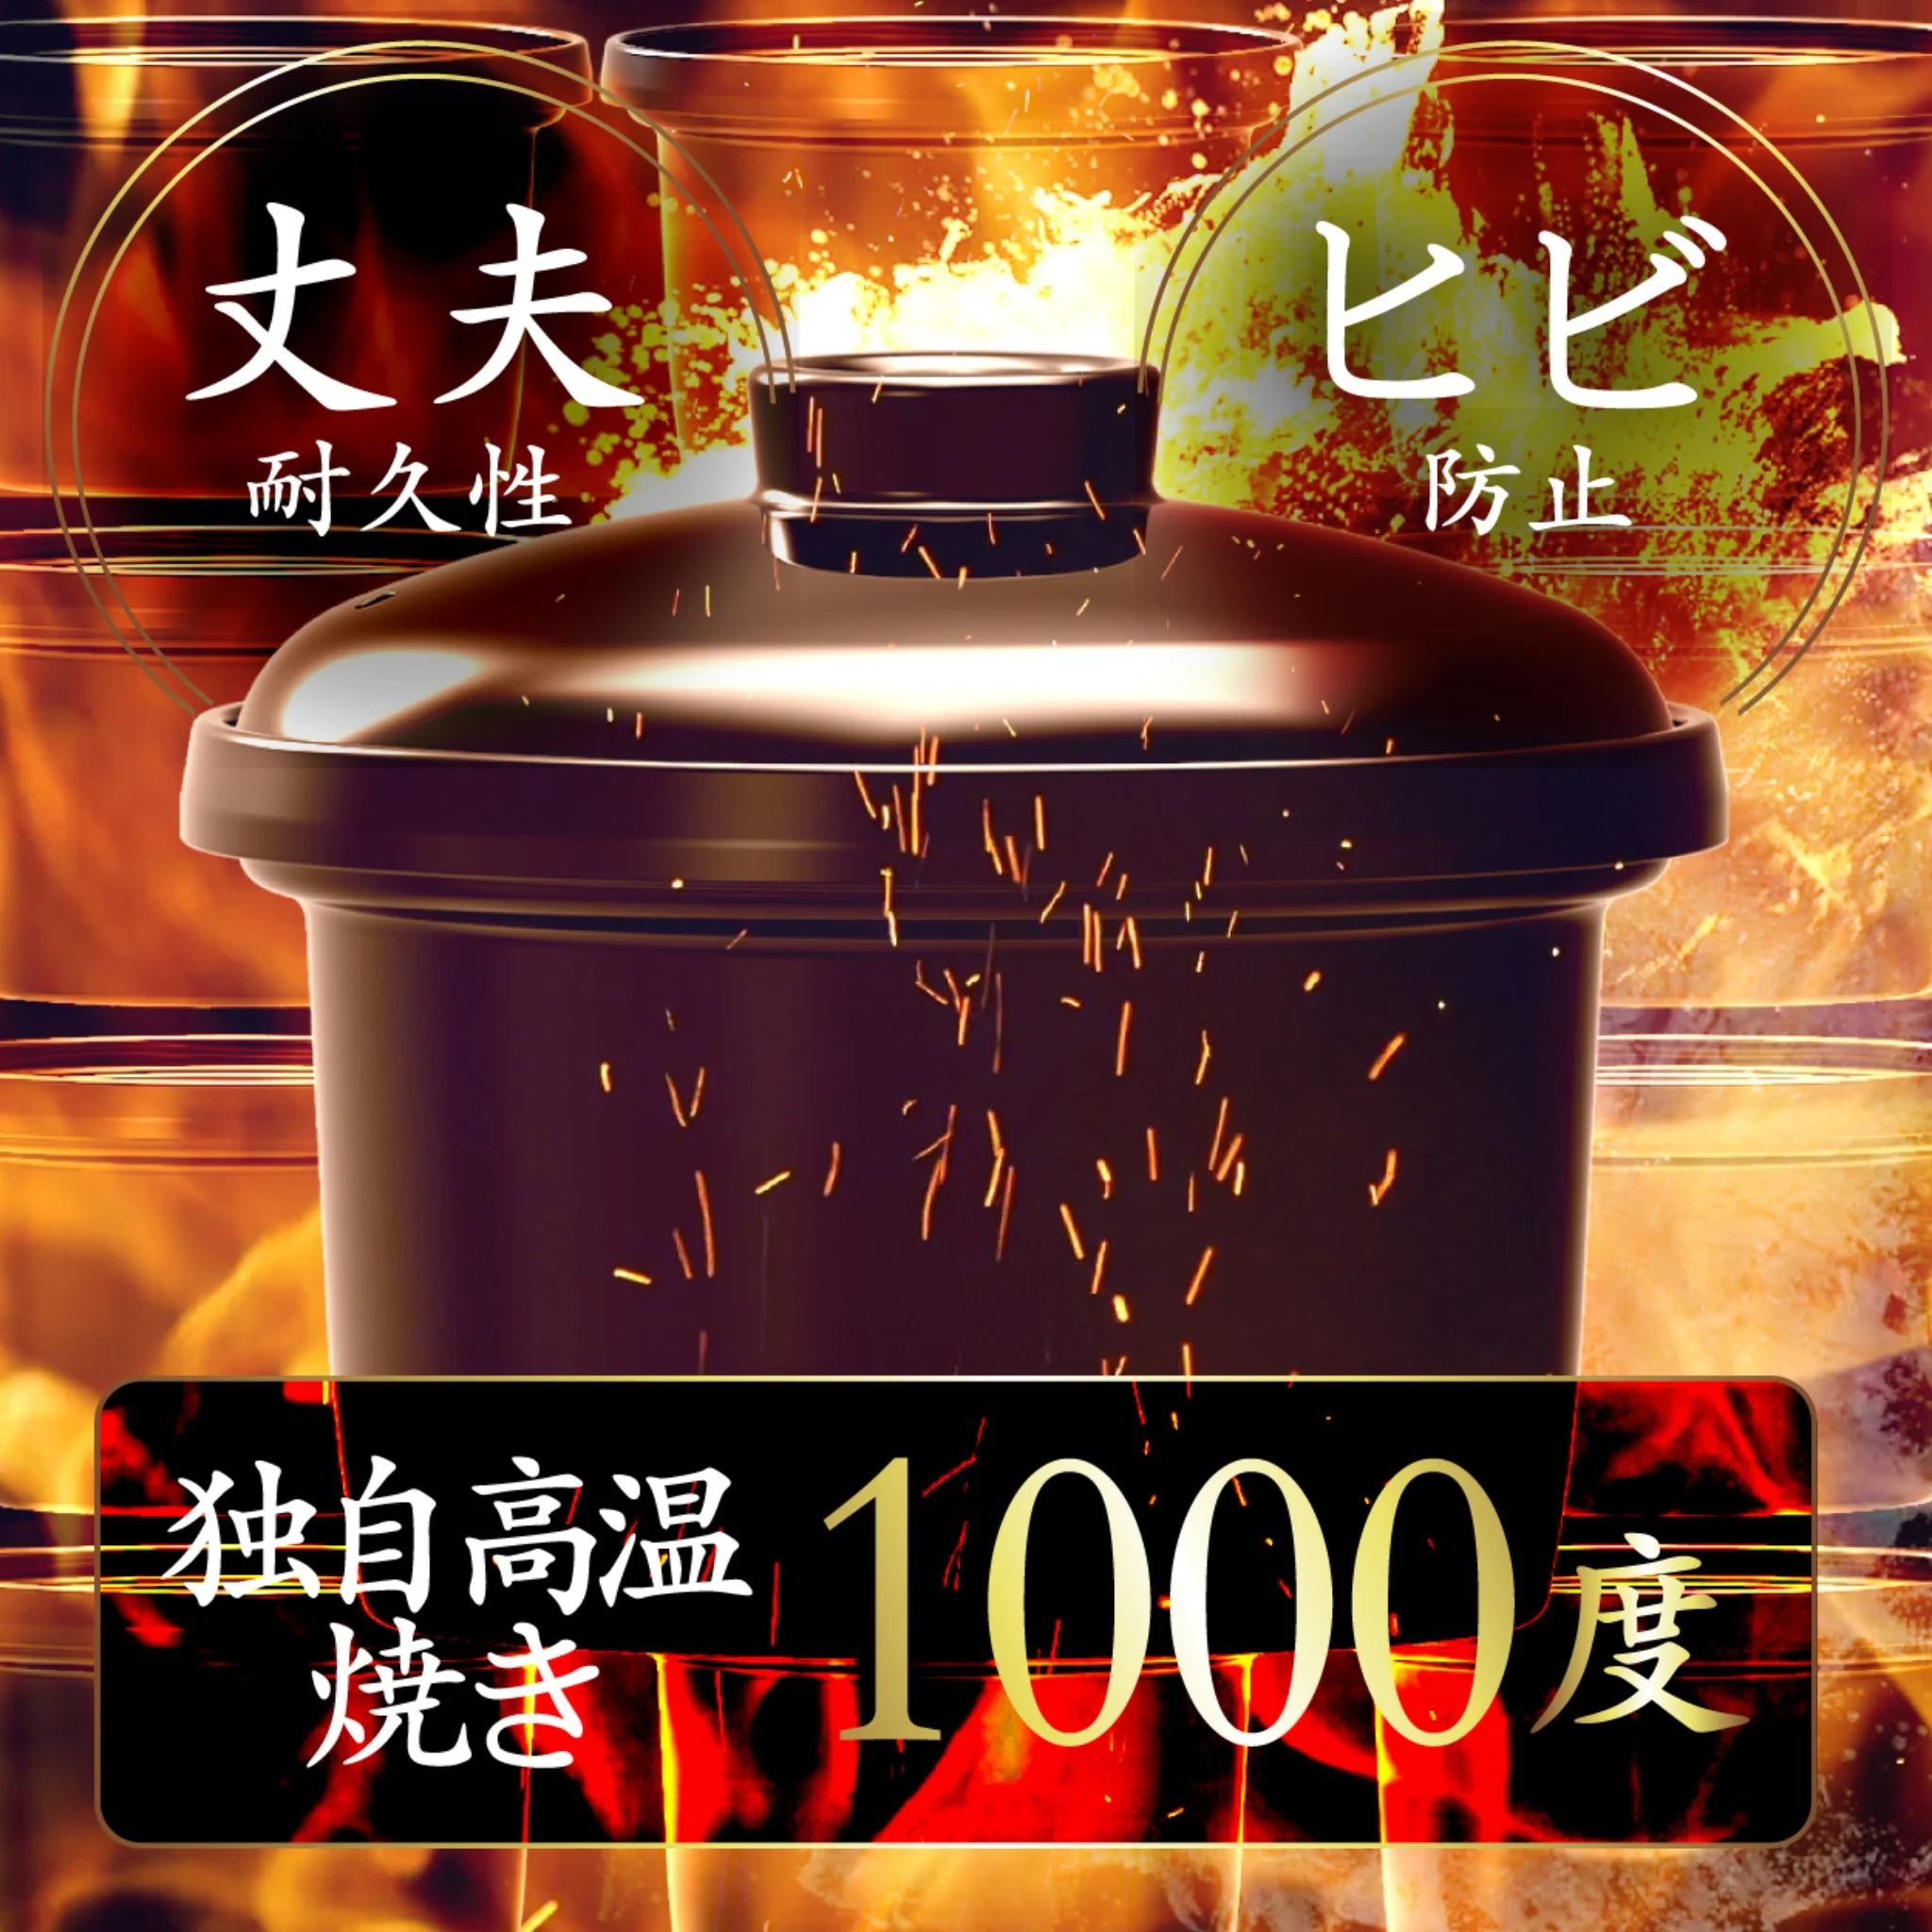 Souyi SY-150 土鍋煲仔飯電飯煲